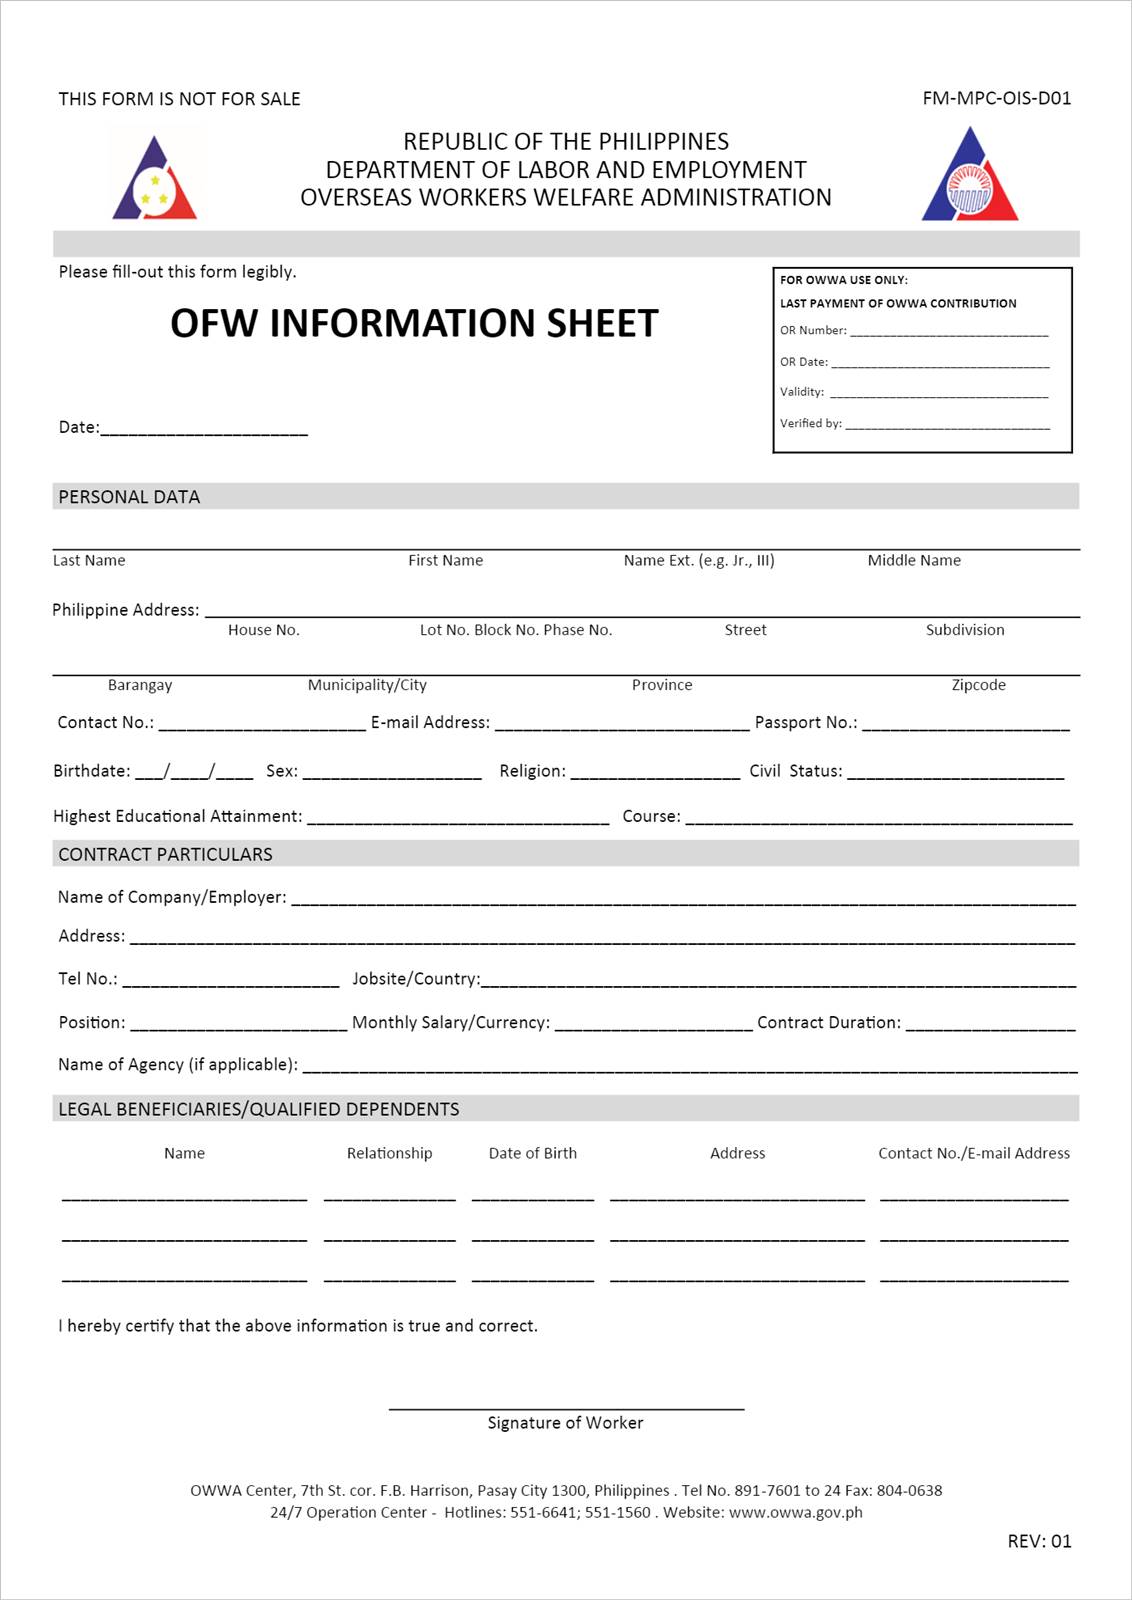 ofw information sheet